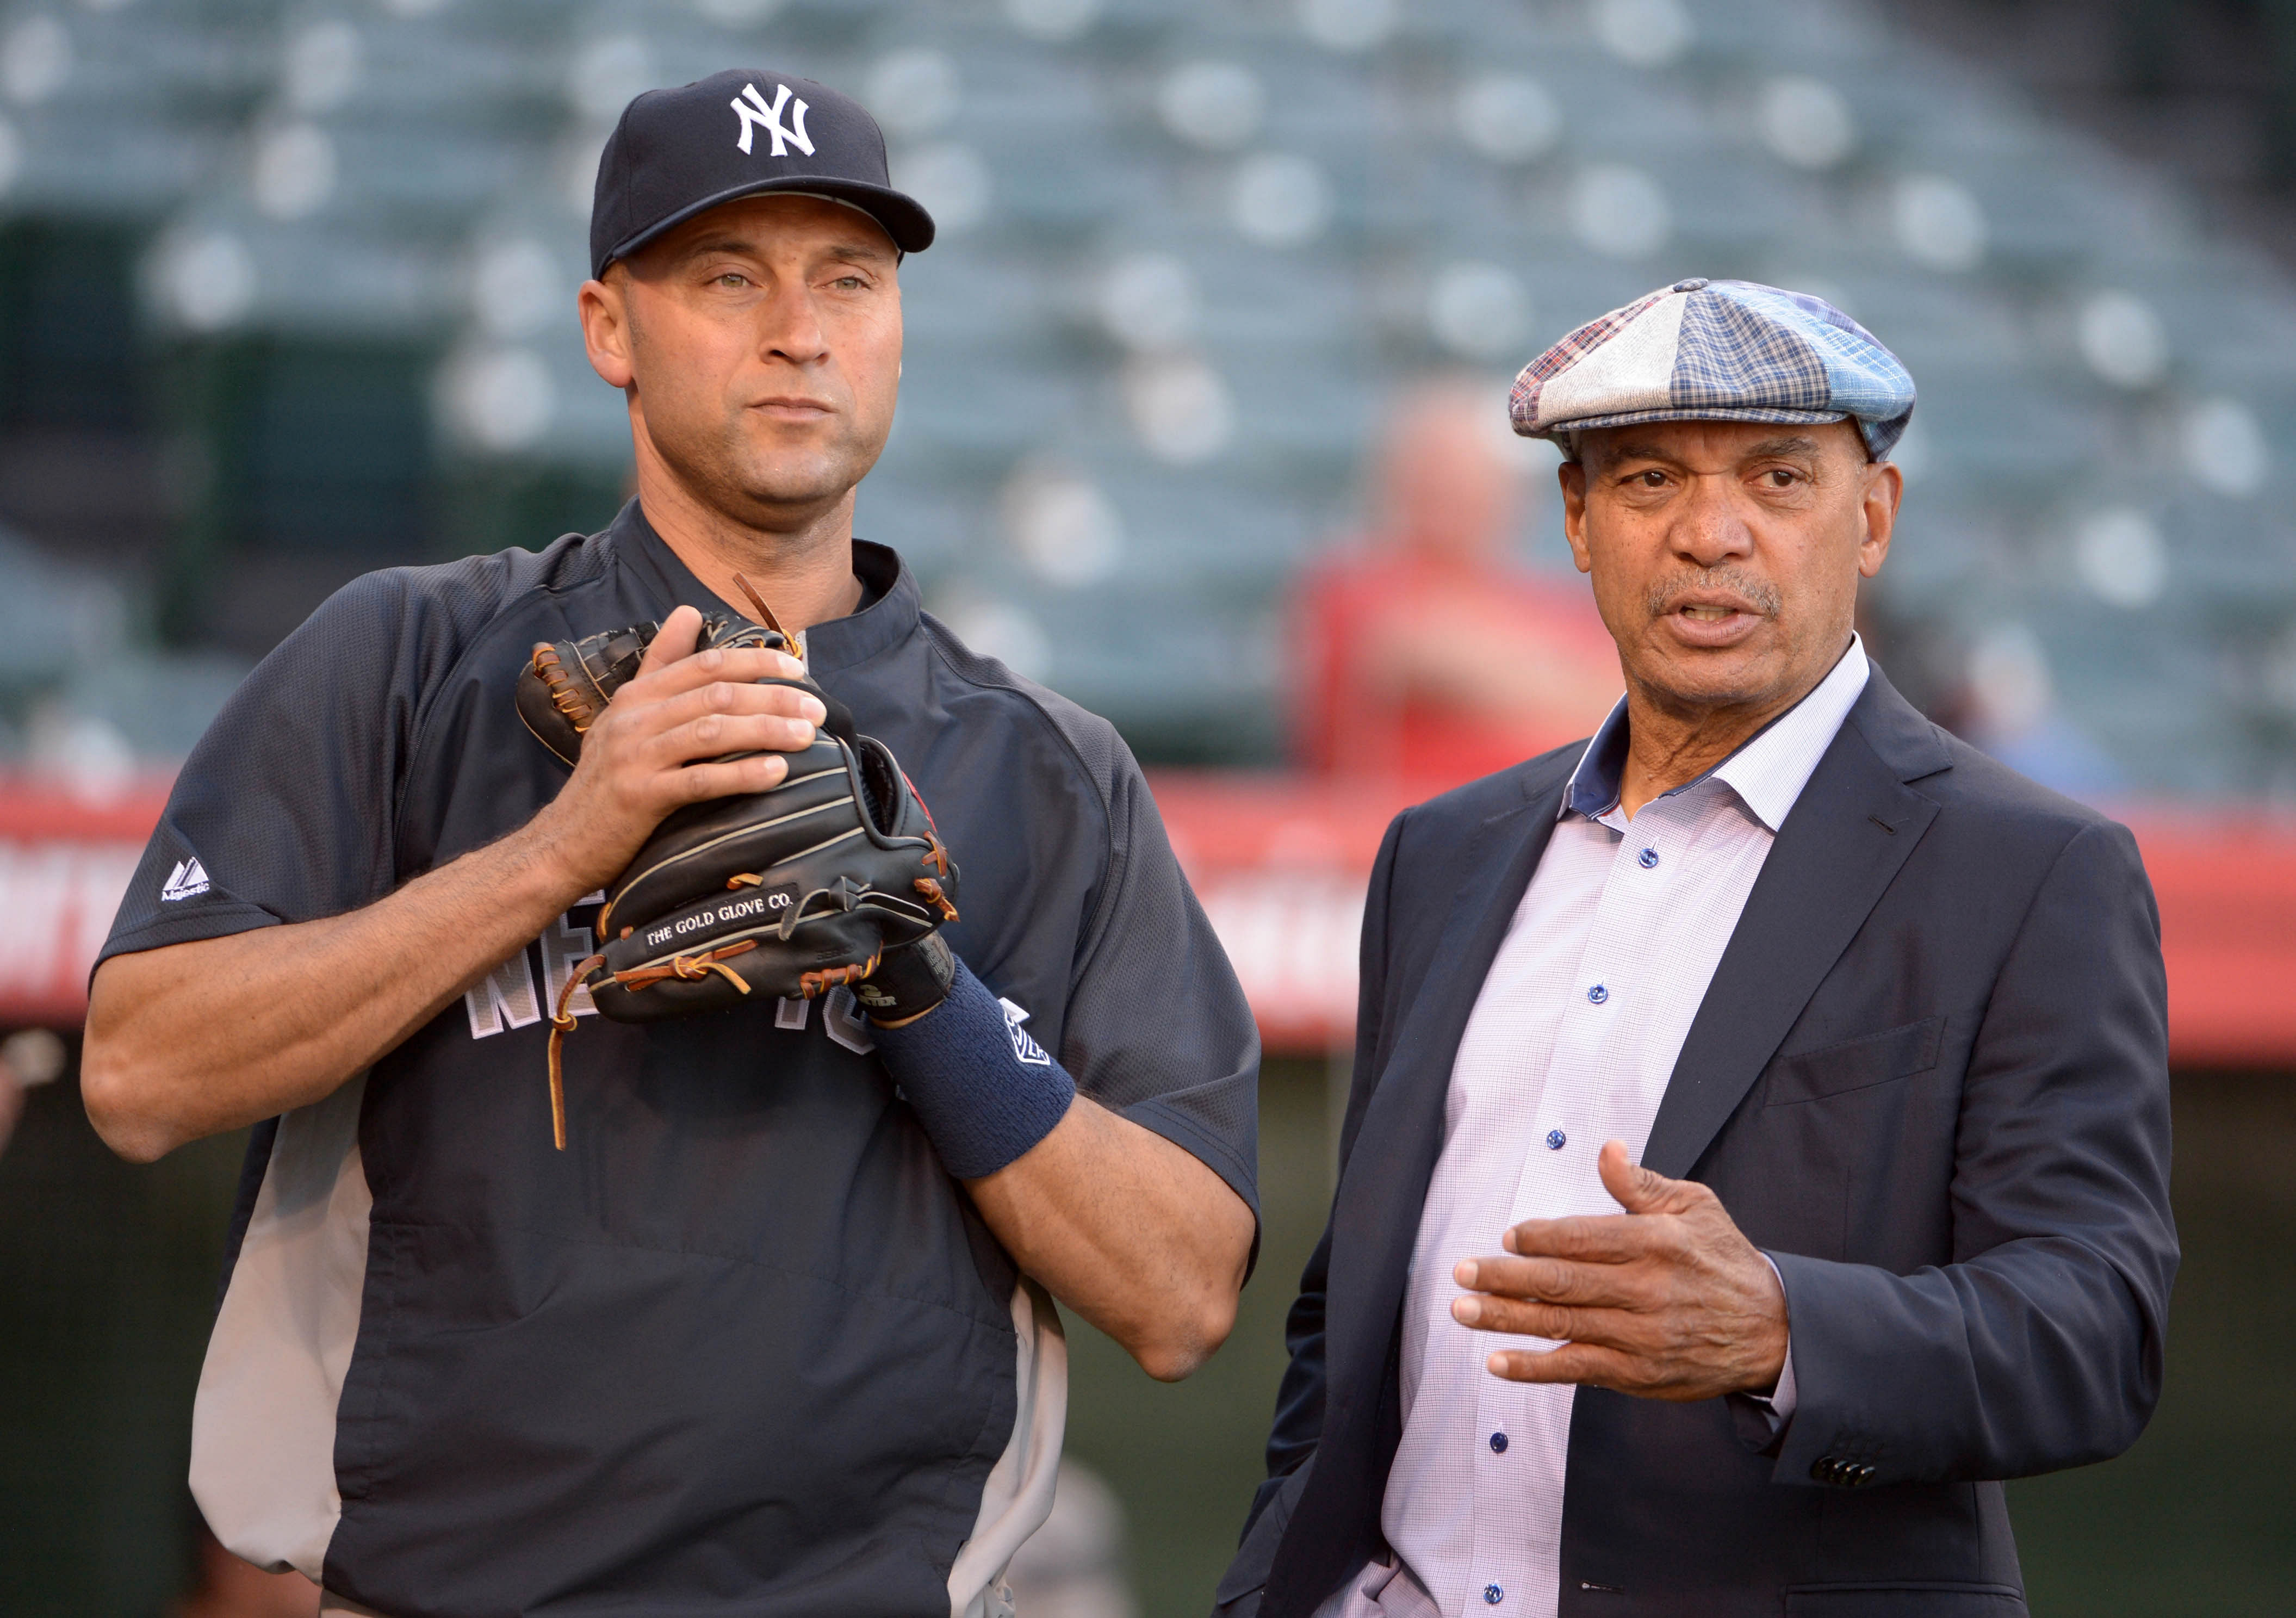 New York Yankees - Derek Jeter and Reggie Jackson 9Image via USA Today)